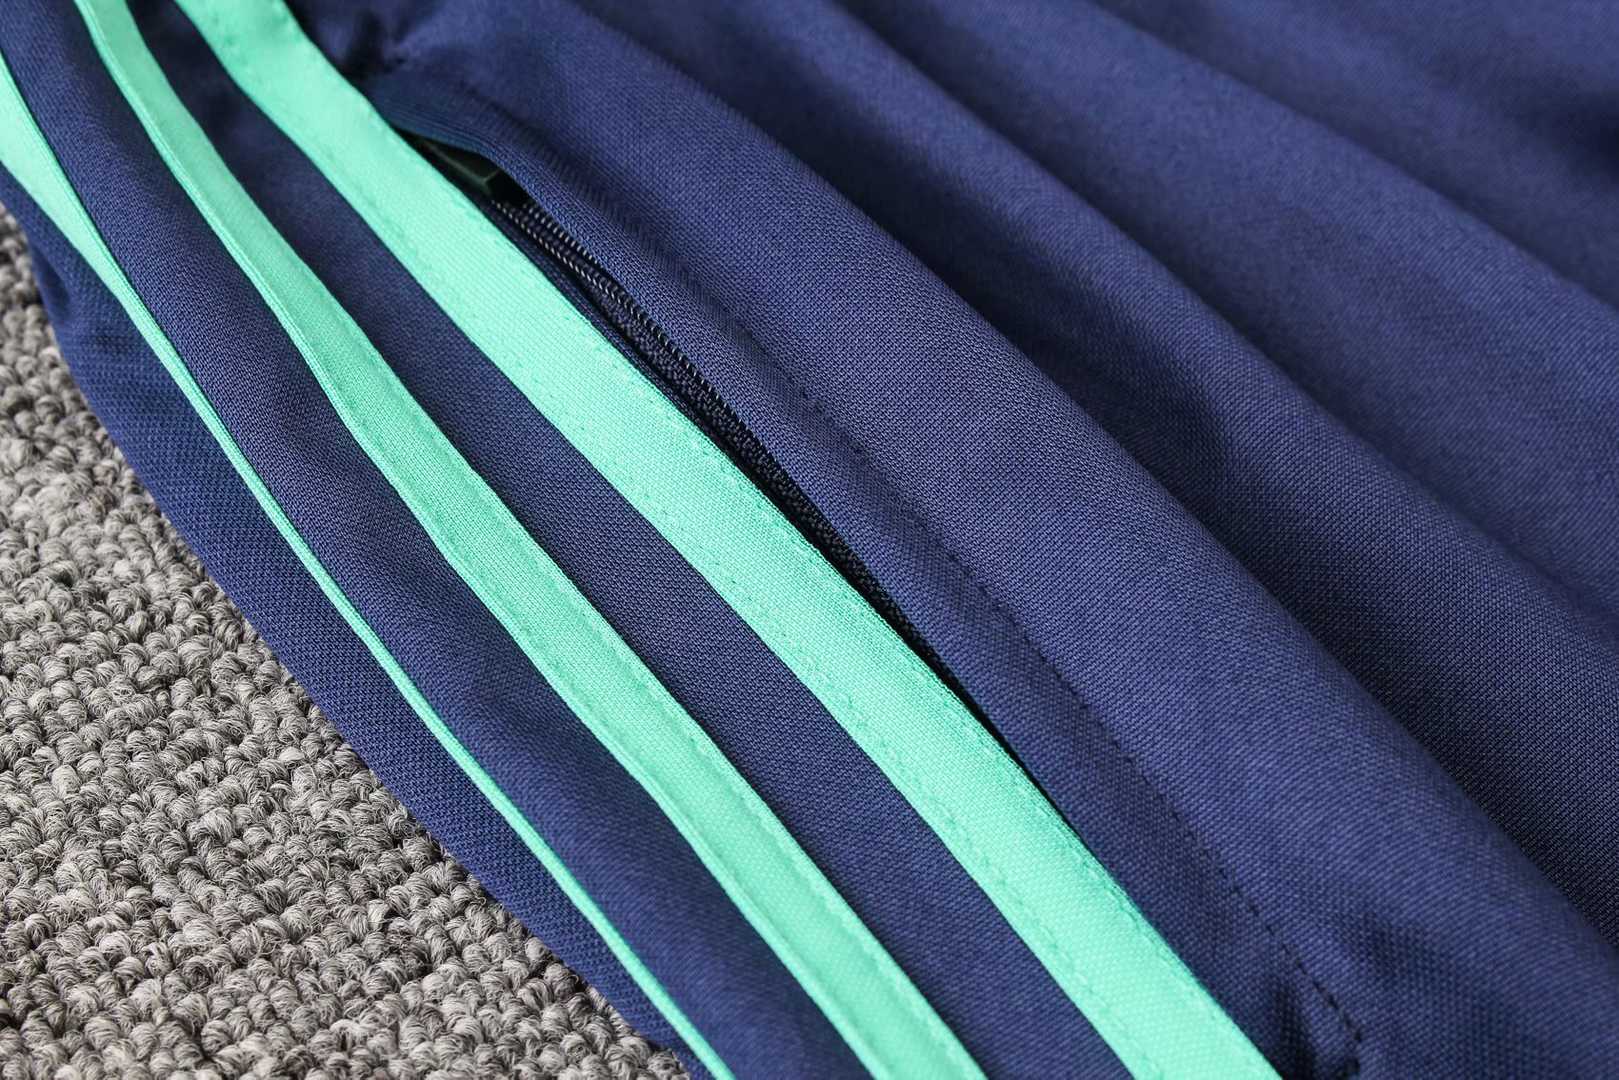 2019/20 Real Madrid High Neck Blue Mens Soccer Training Suit(Jacket + Pants)